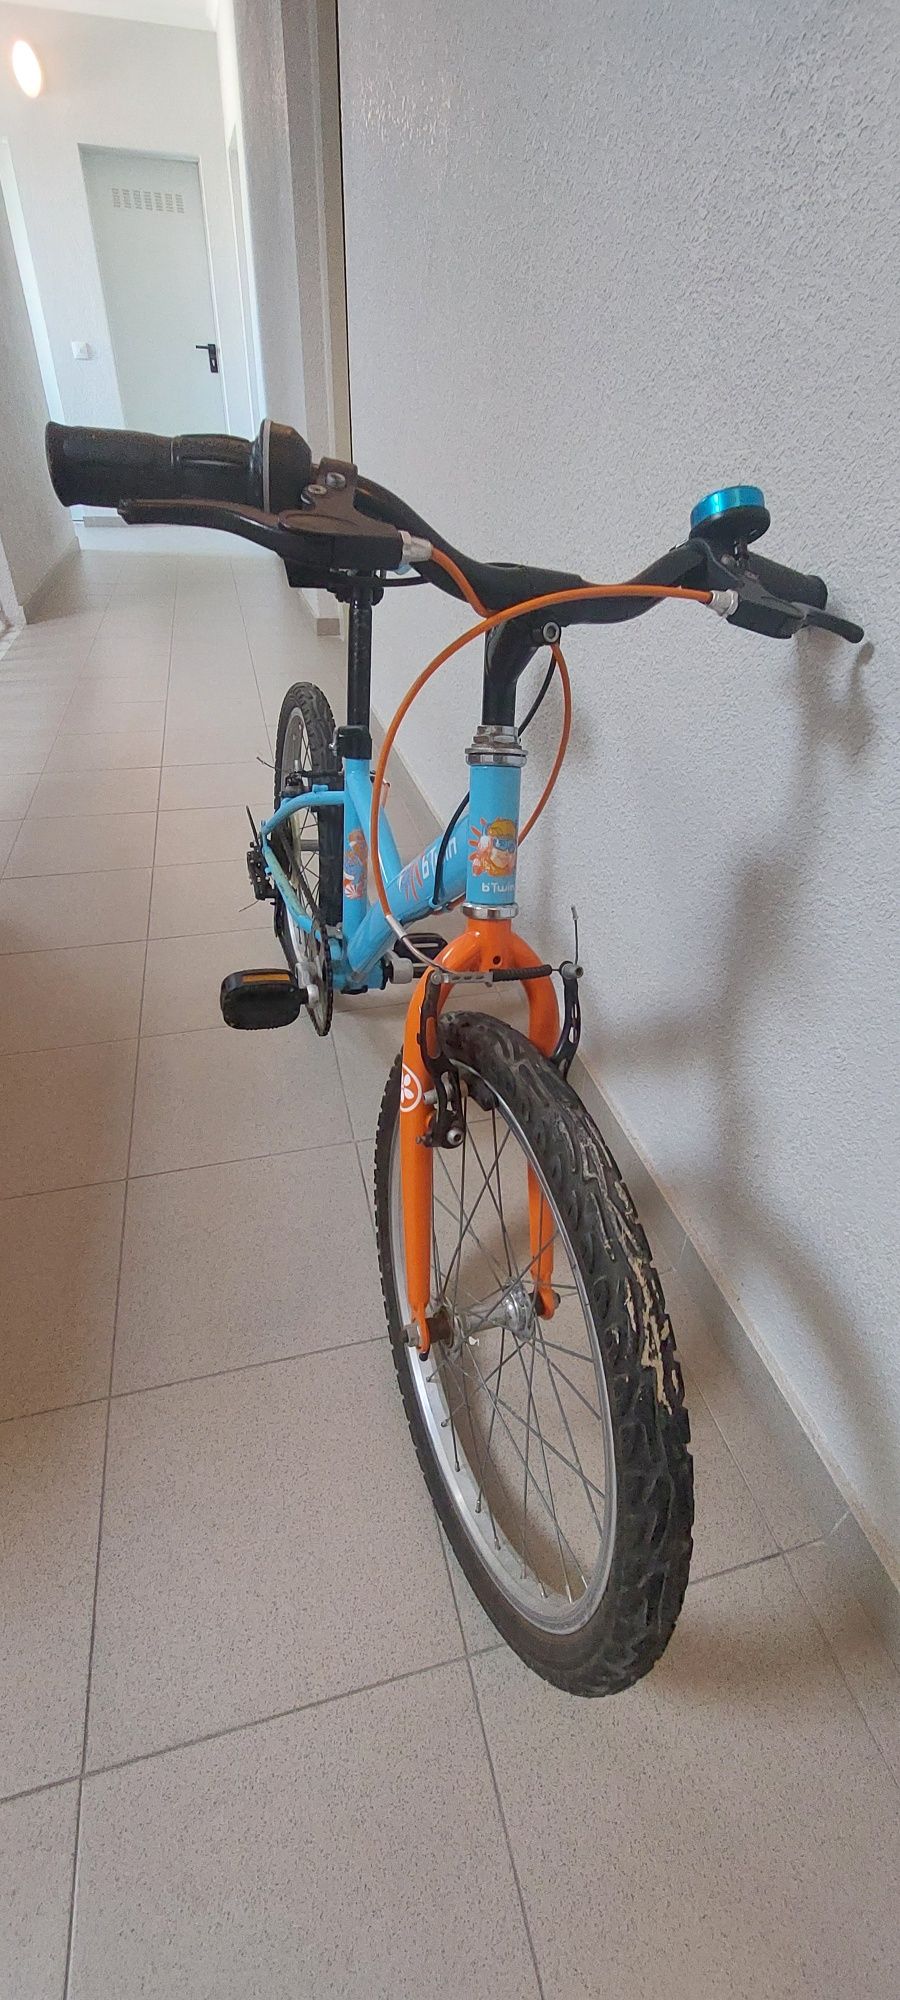 Bicicleta criança roda 20"